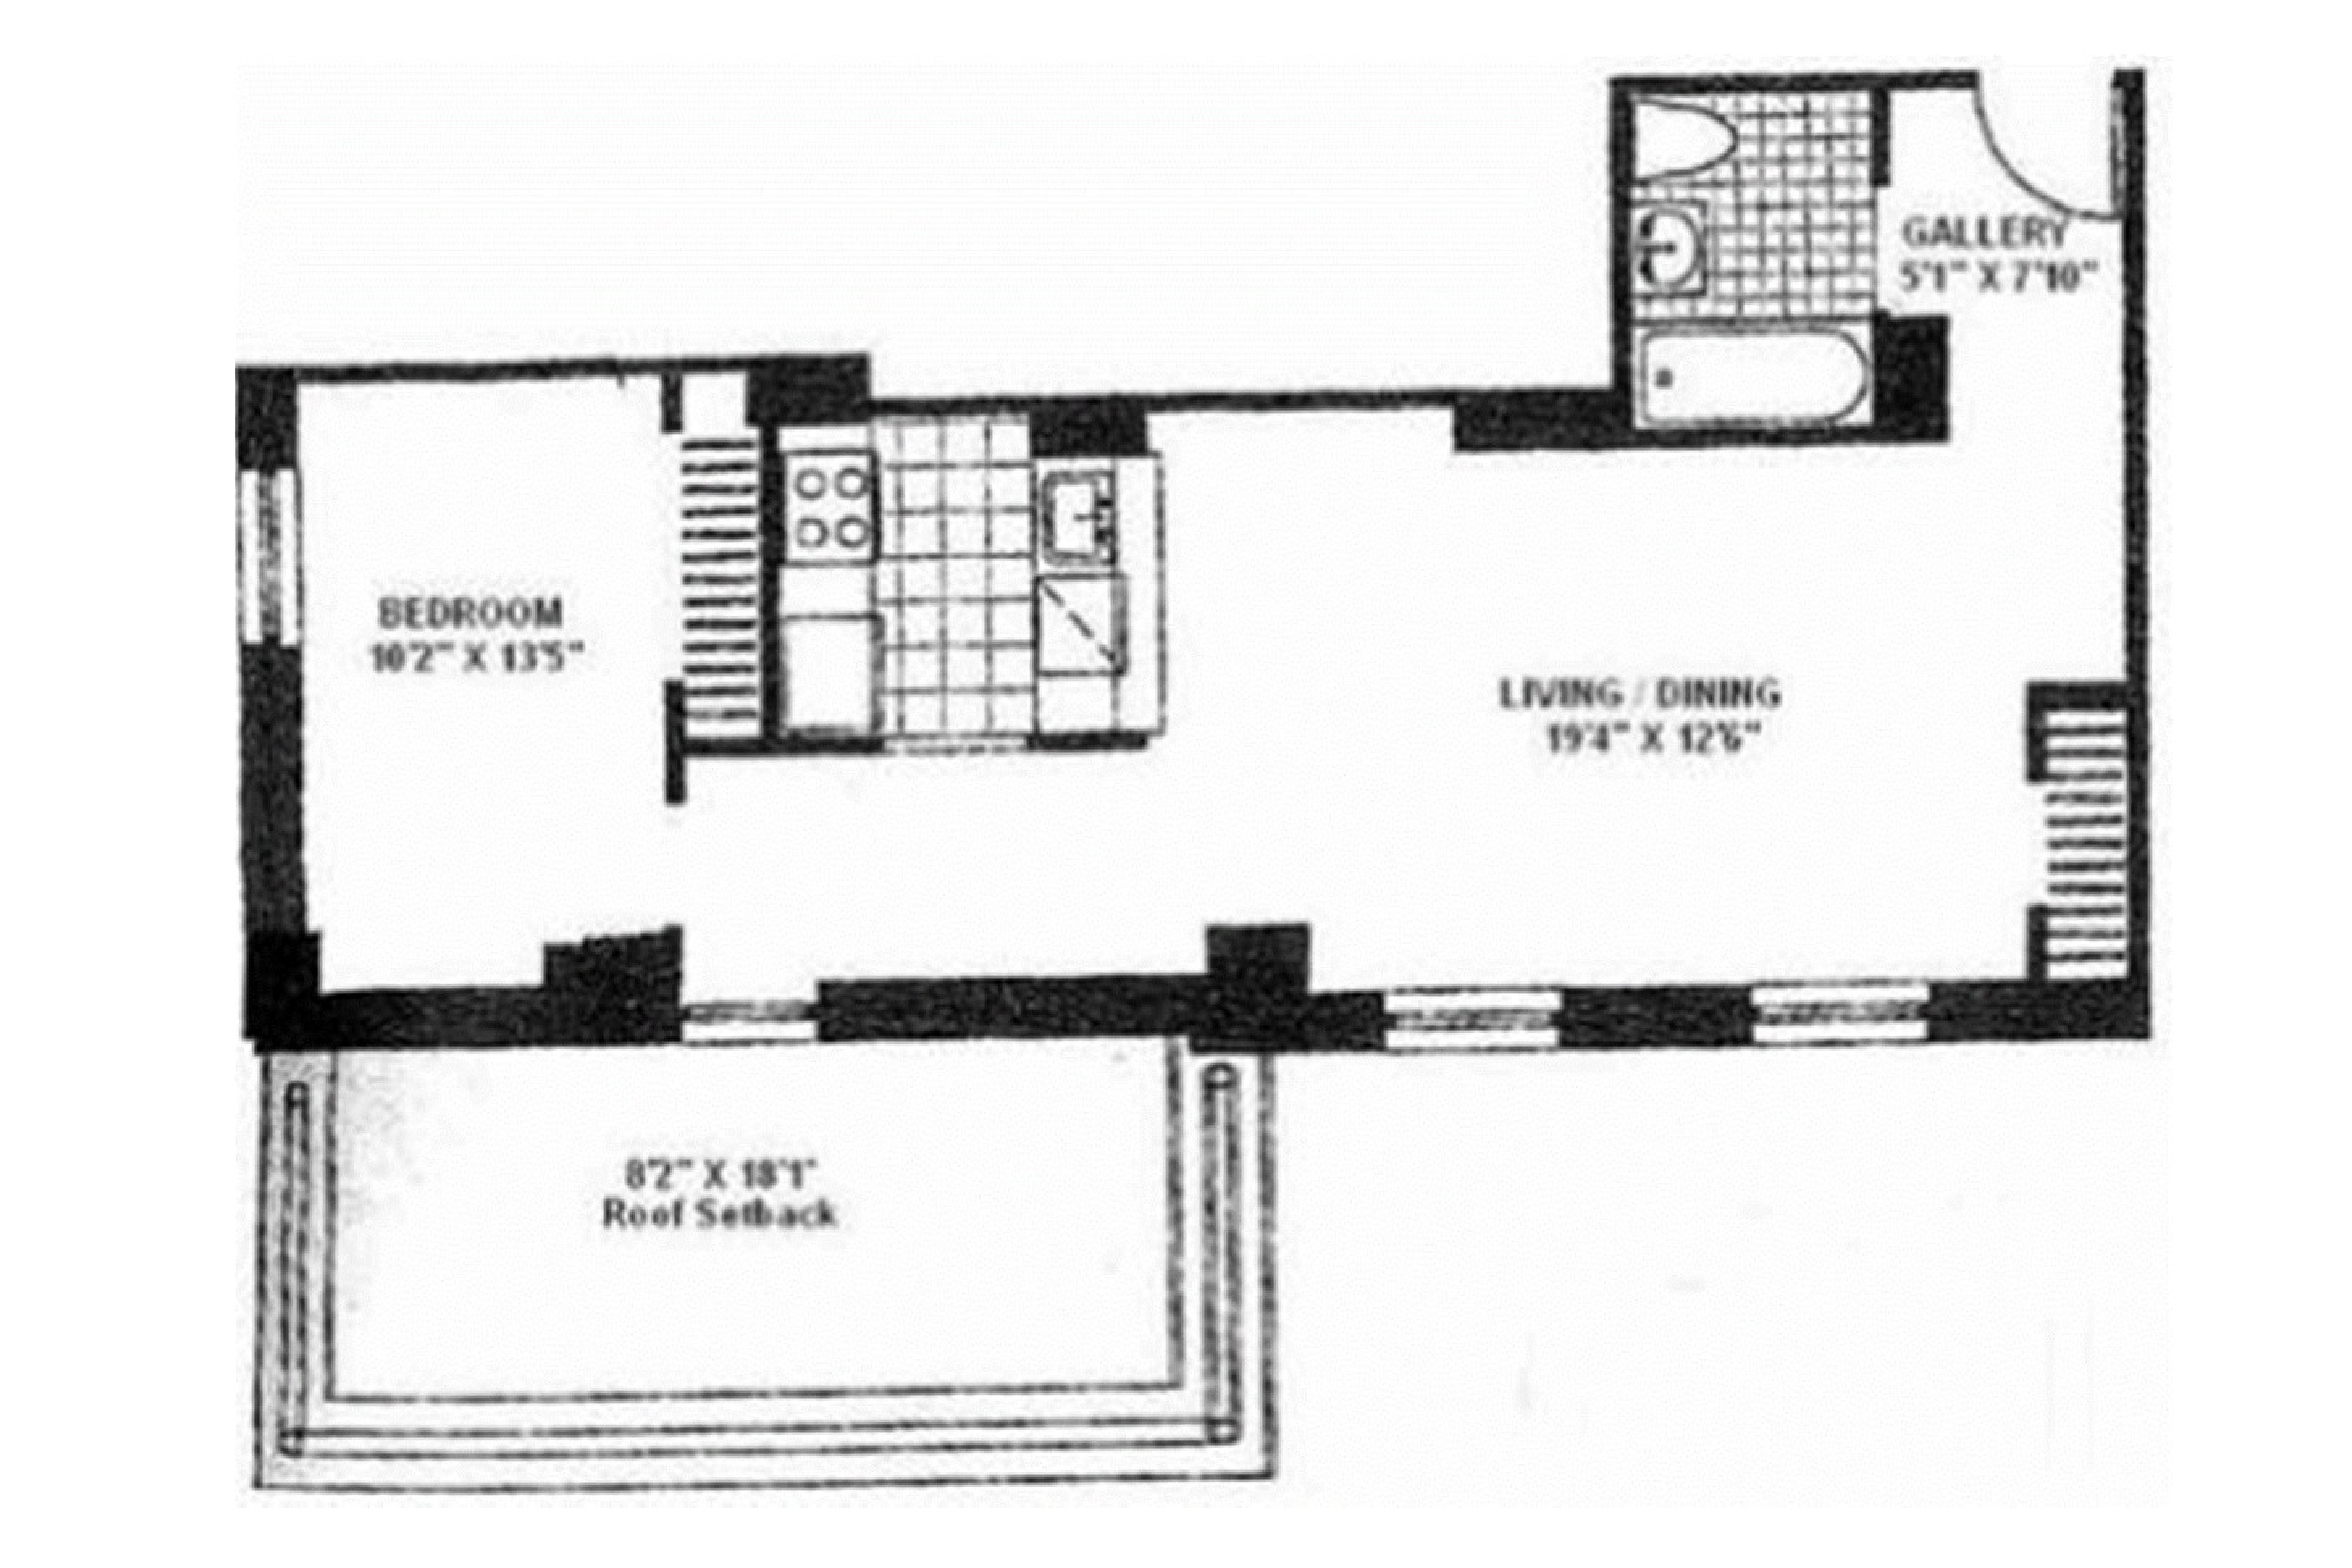 Floorplan for 20 West Street, 29D